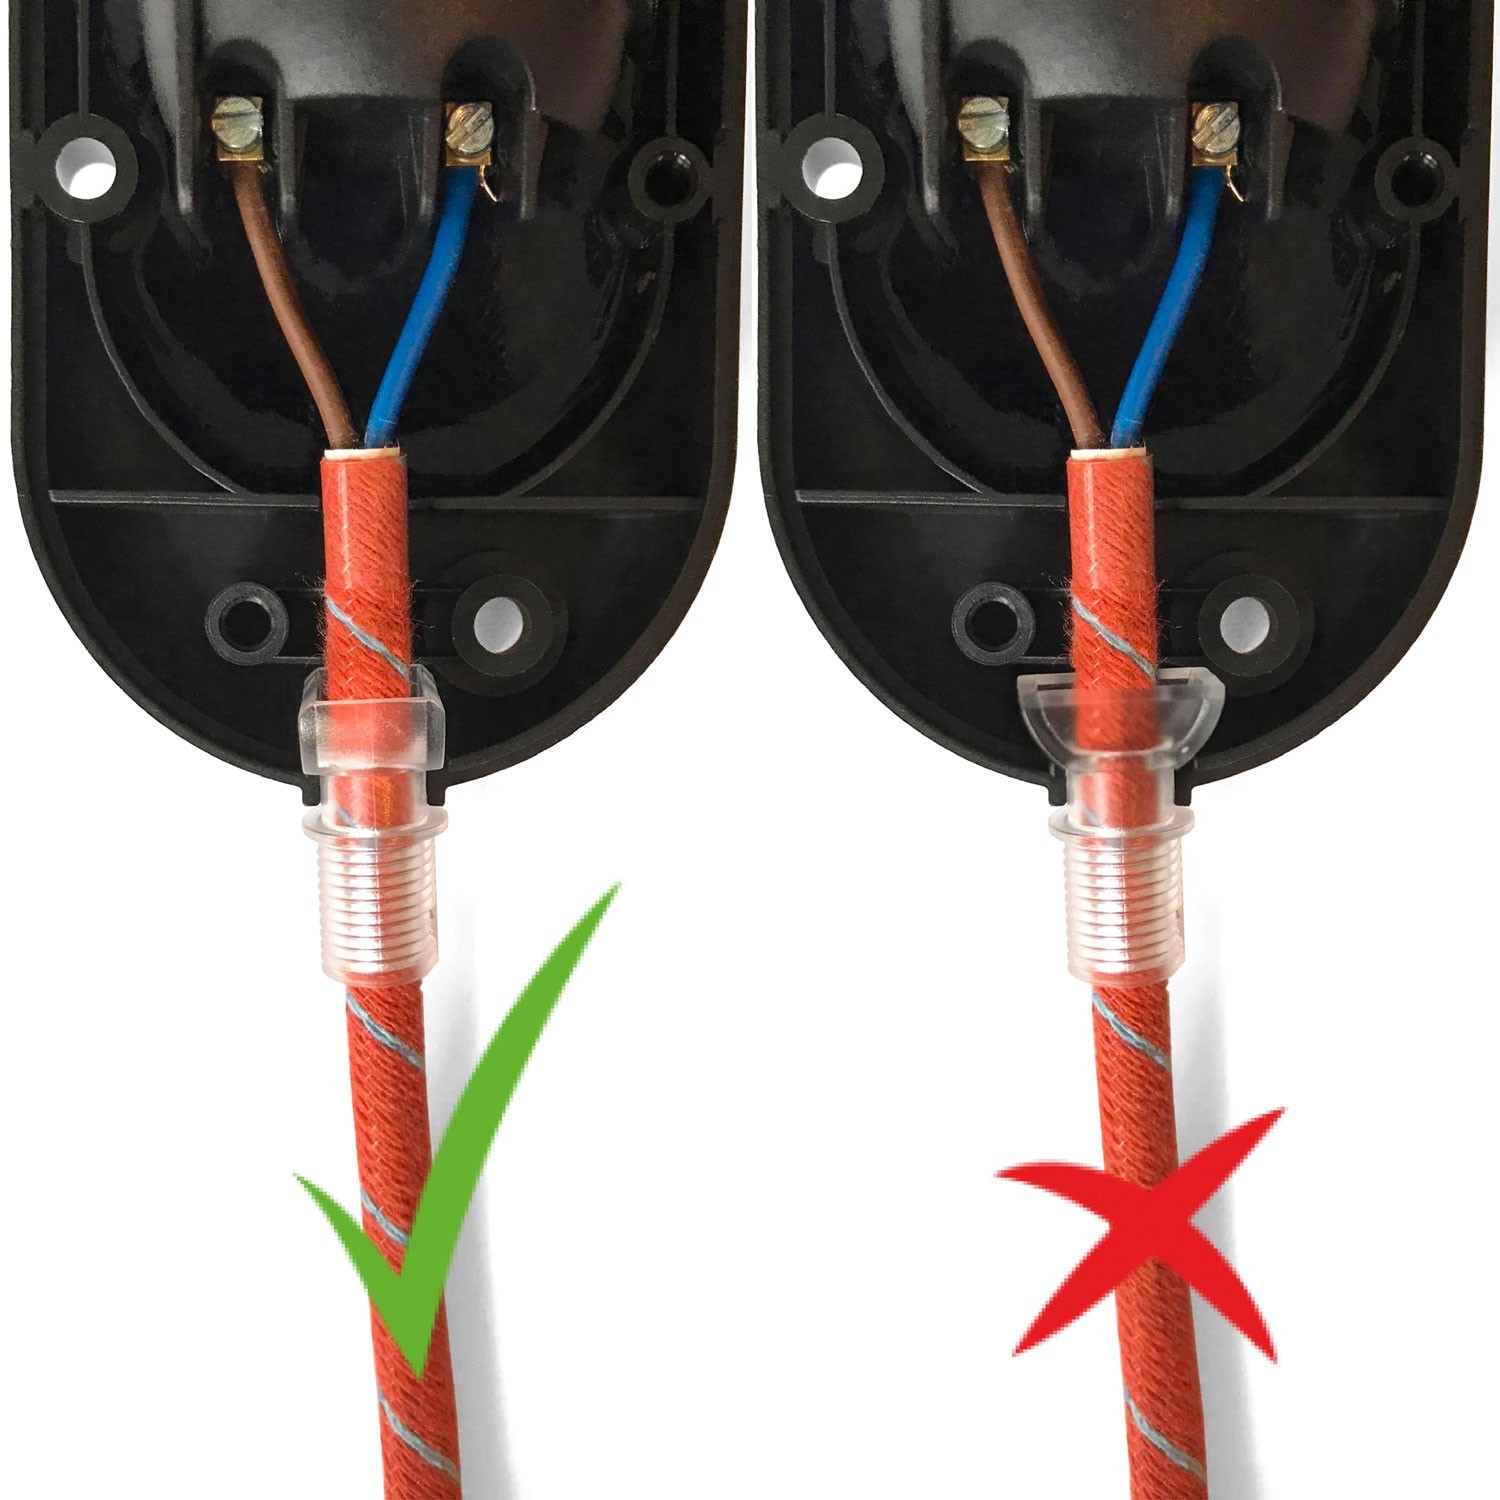 Threaded connection element for EIVA lamp holder